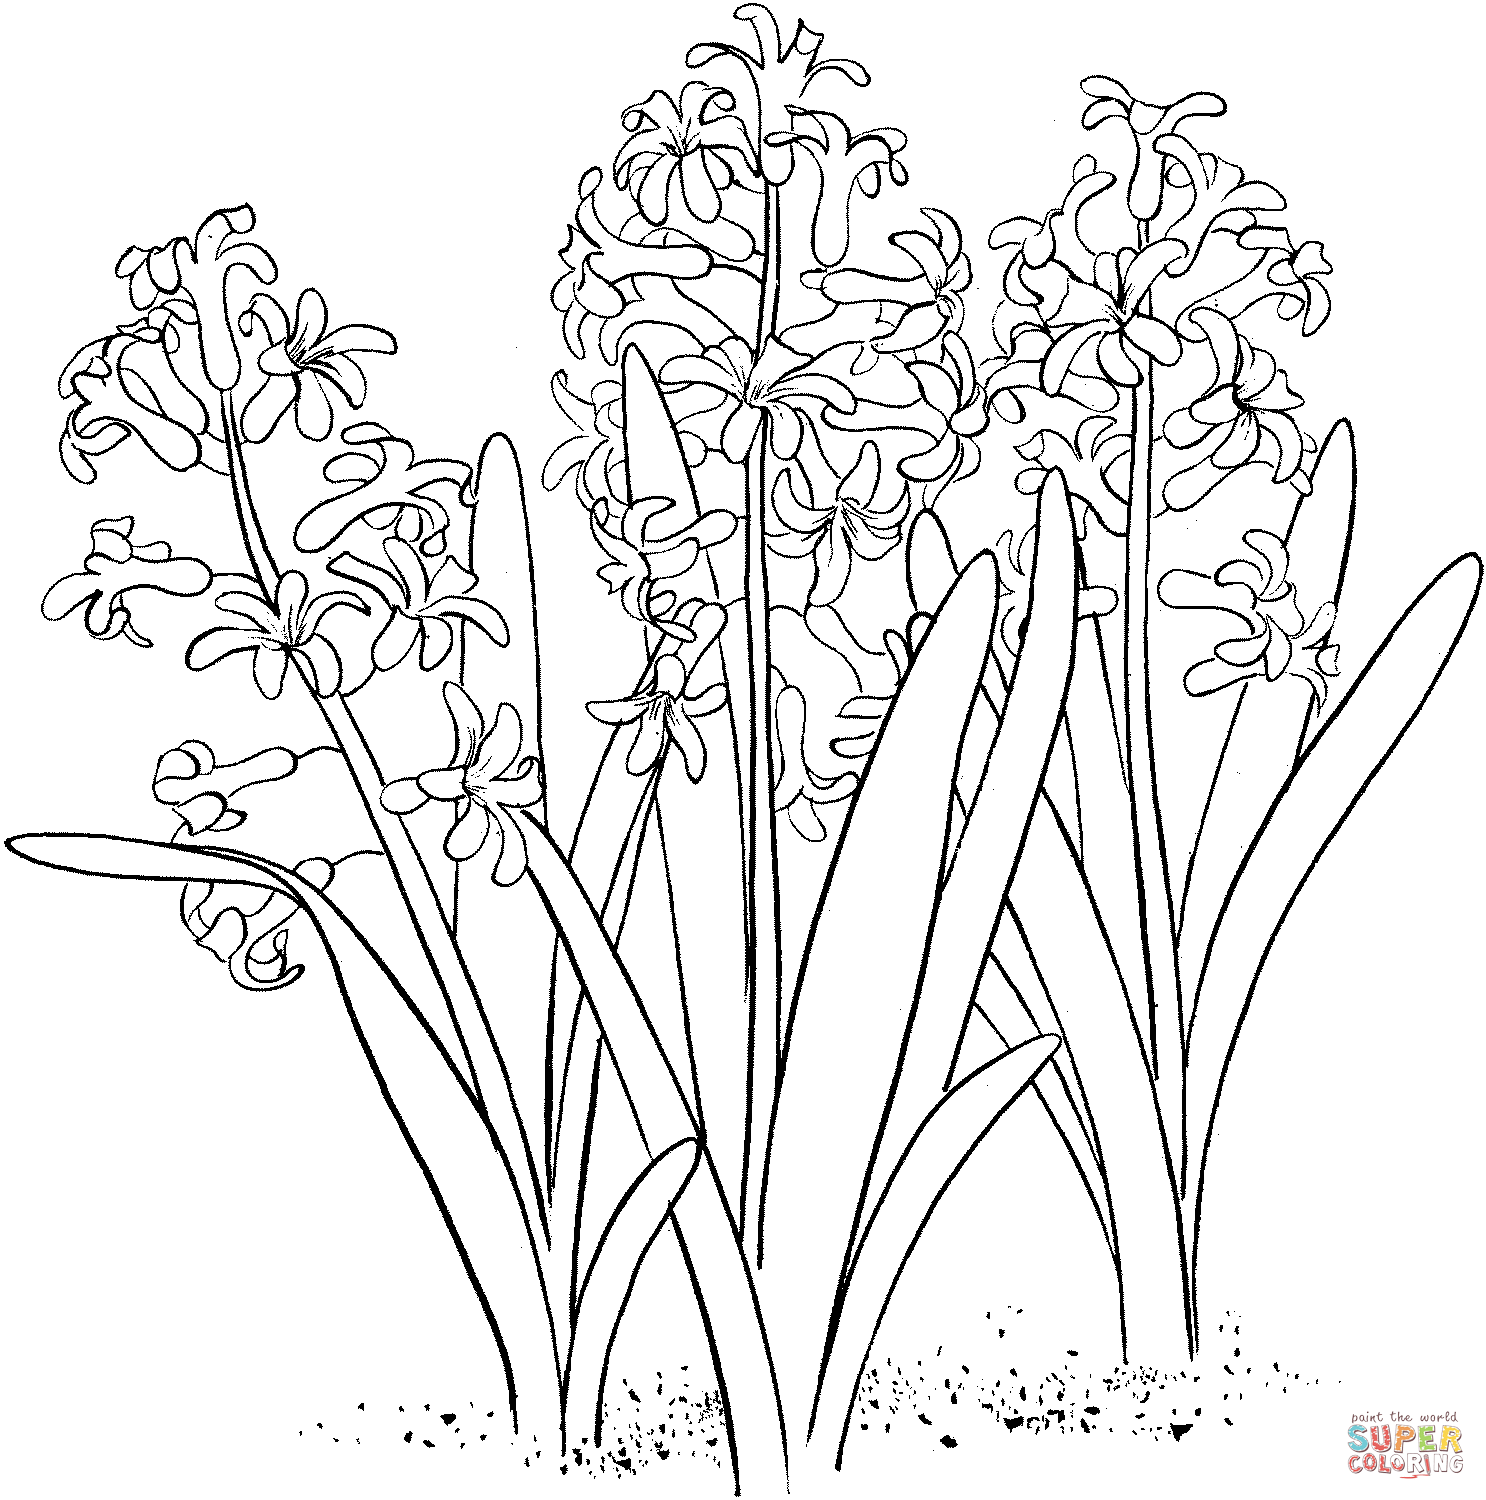 Hyacinthus Orientalis of gewone tuinhyacint van Hyacinthus